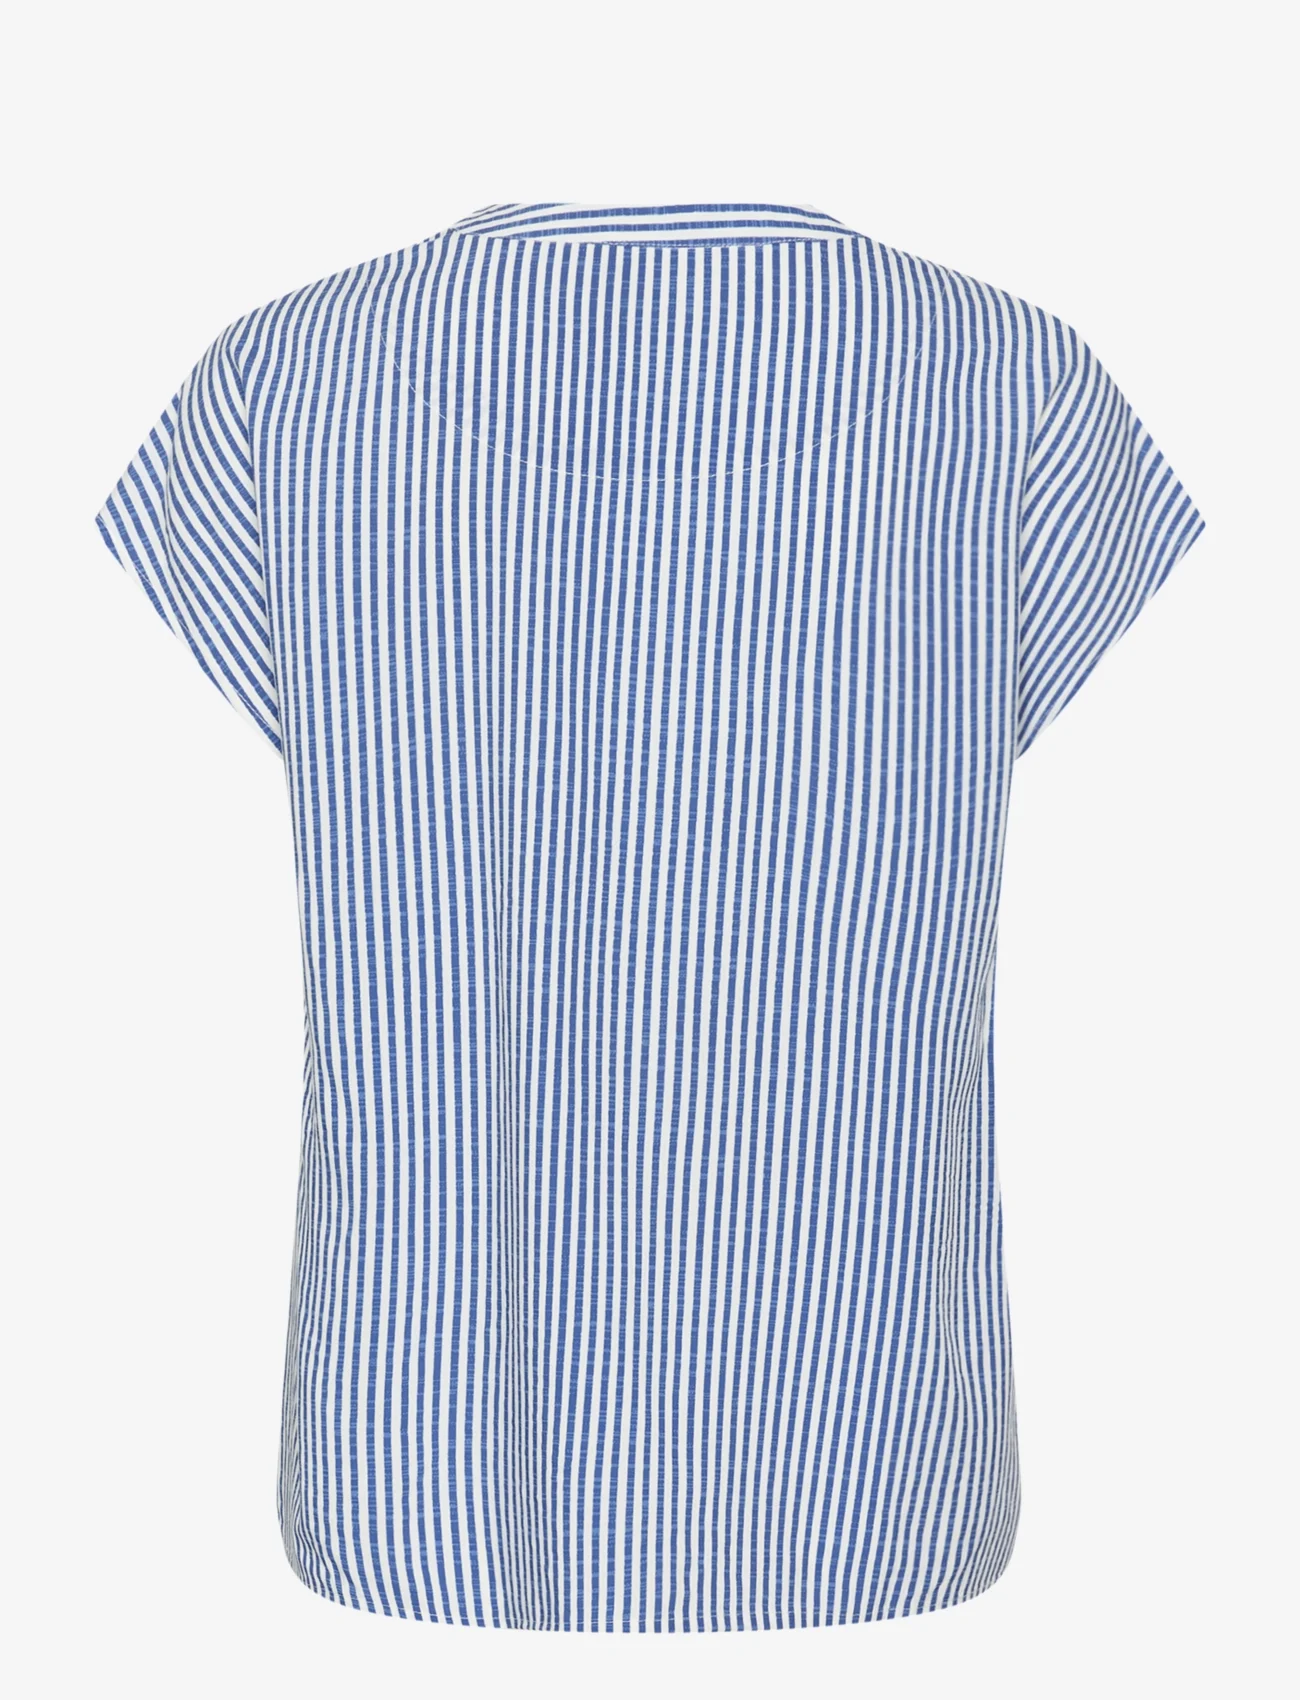 Cream - CRTiah Blouse cap sleeve - short-sleeved blouses - blue milkboy - 1